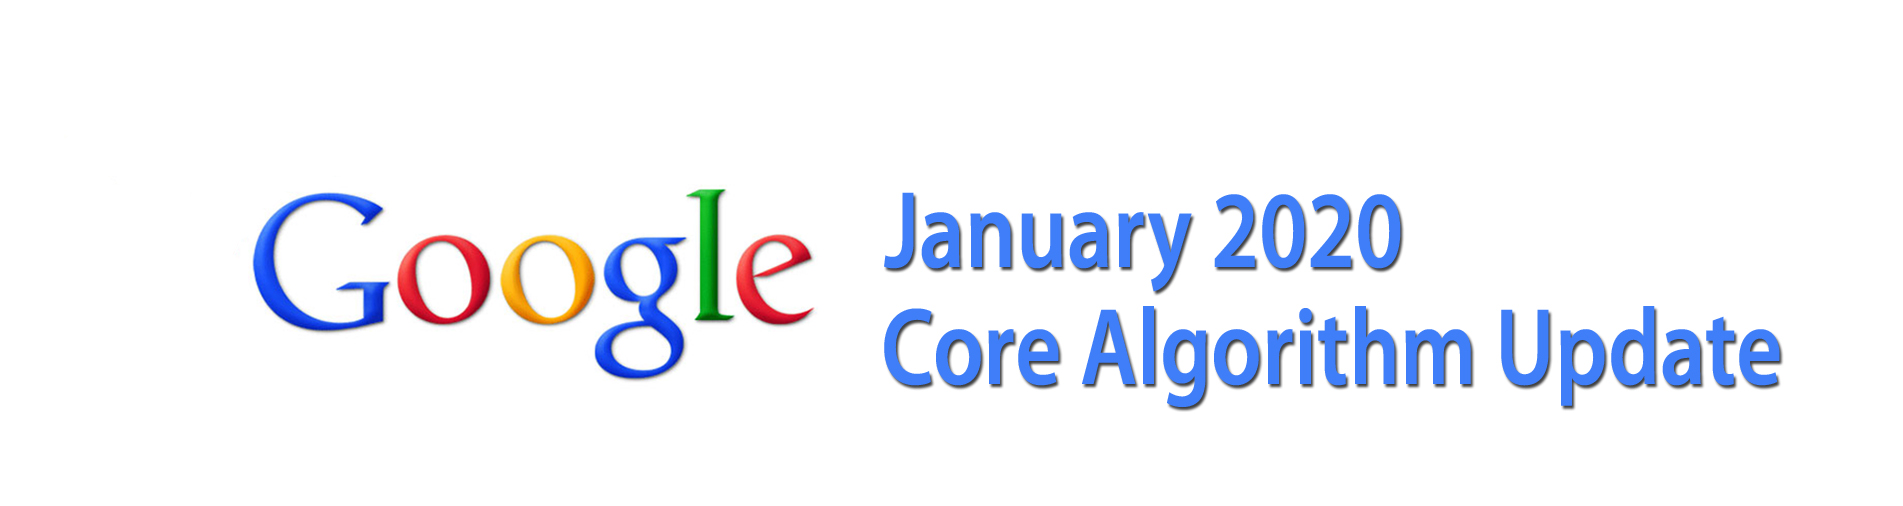 January 2020 Core Algorithm Update